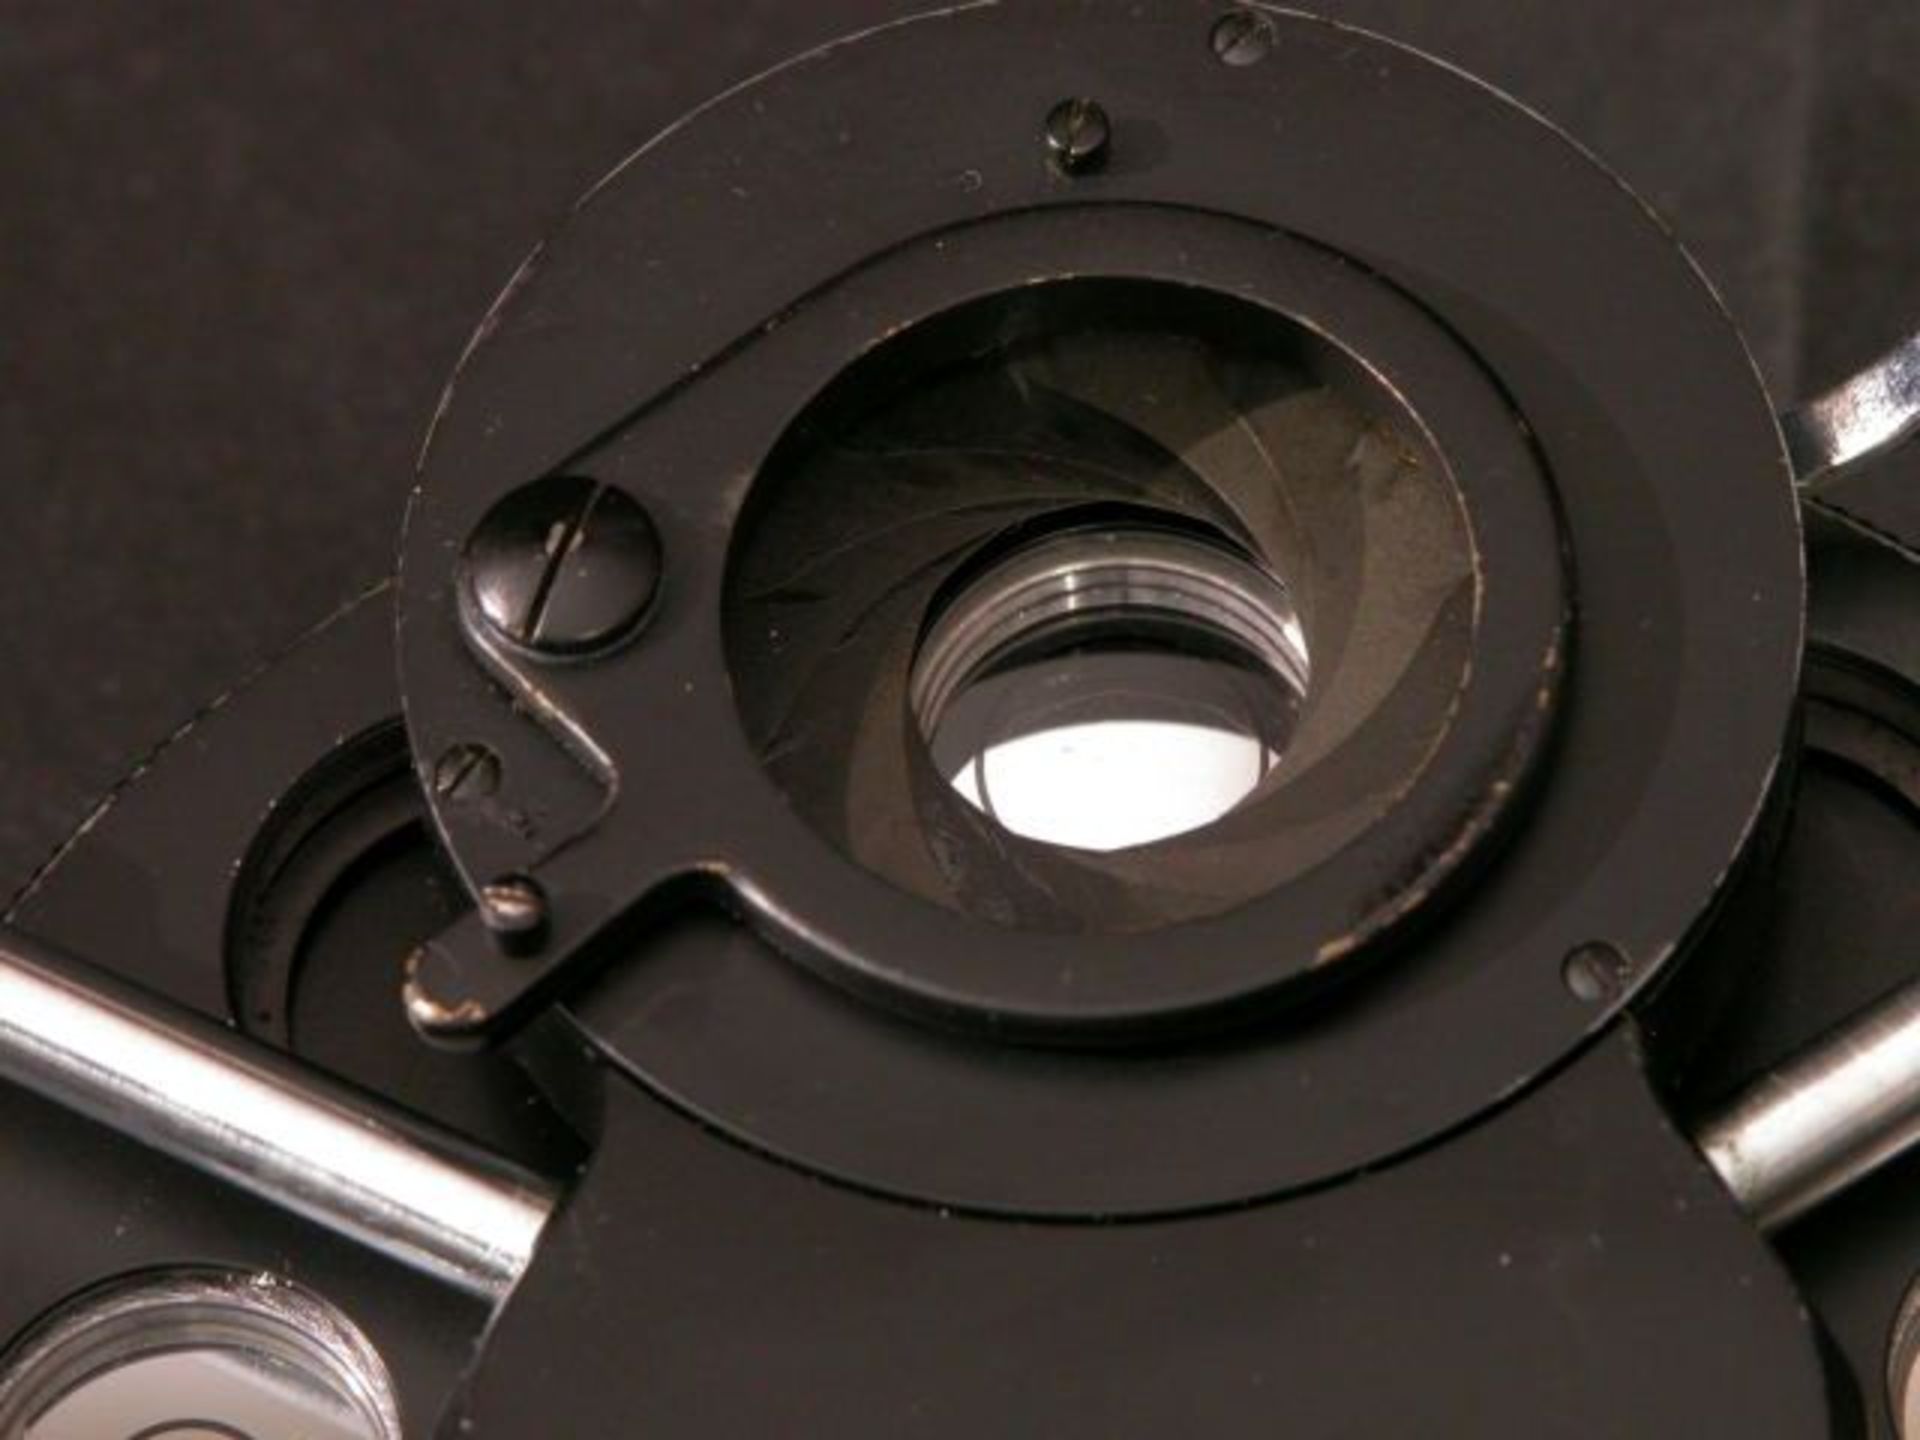 Reichert Austria MICROSCOPE Nr. 14 098 Condenser W/ Iris Dovetail 4 Lenses, Qty 1, 330795621392 - Image 4 of 6